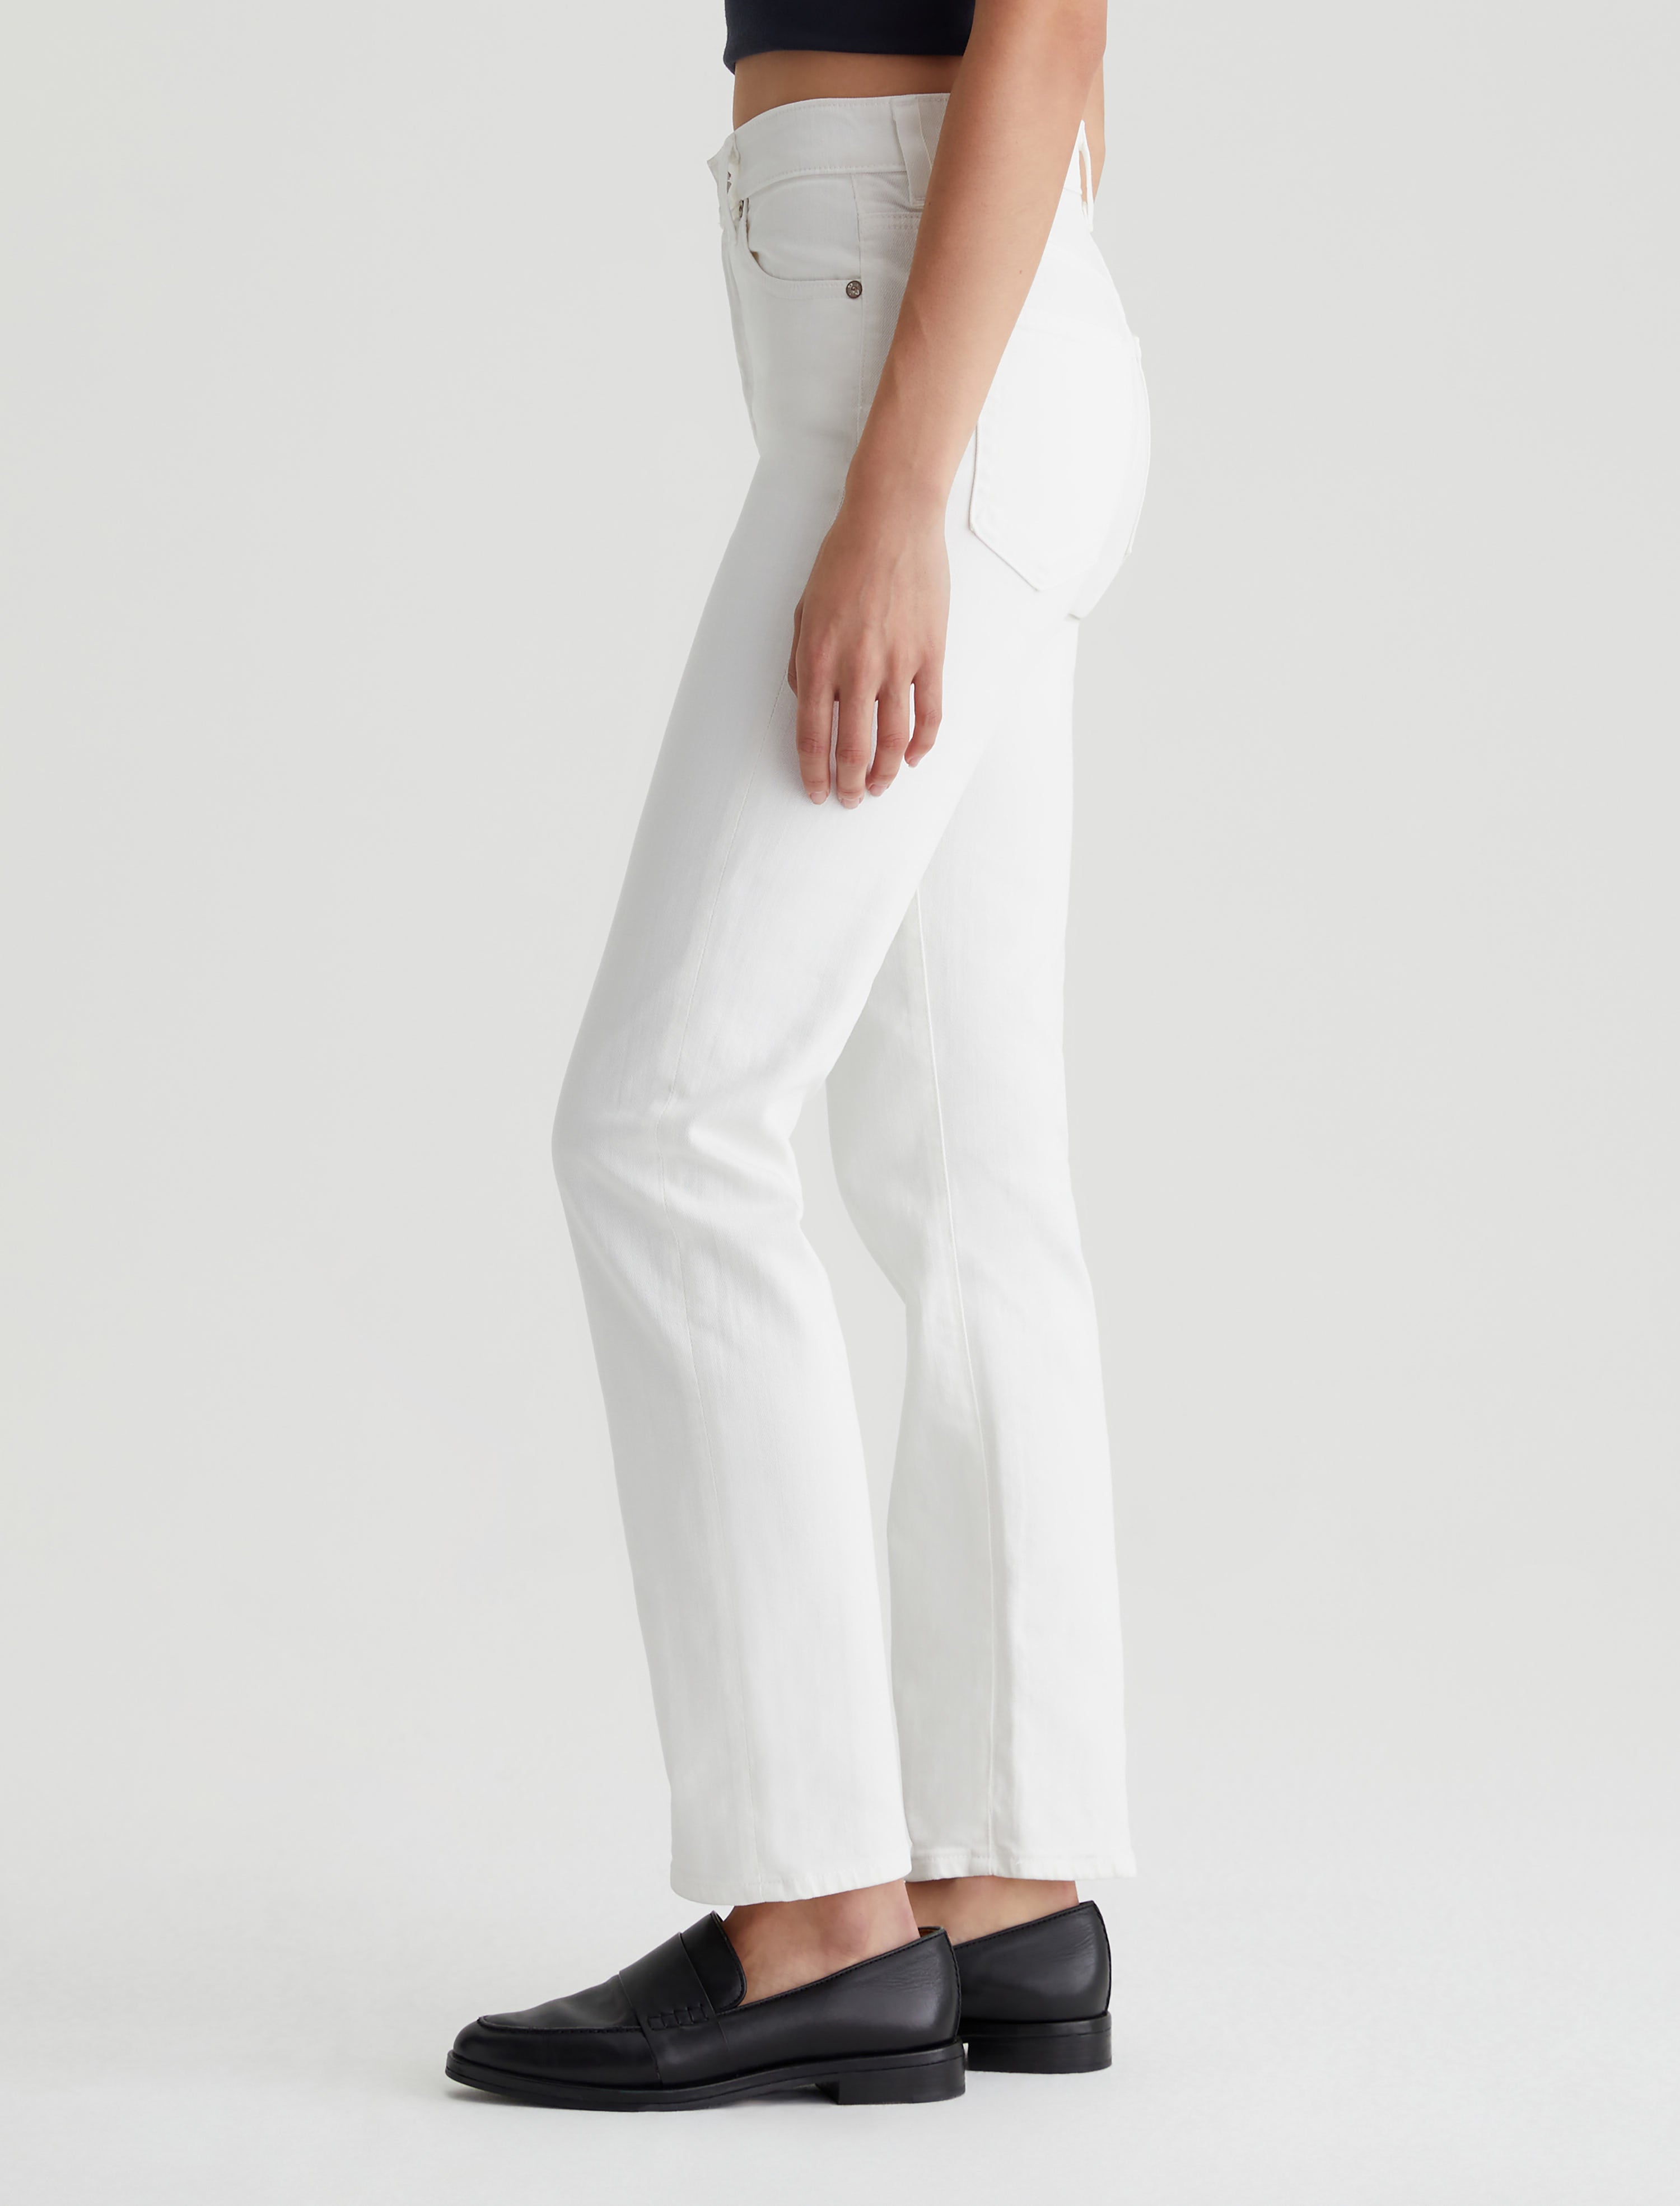 Next COMFORT STRETCH STRAIGHT JEANS - Slim fit jeans - white - Zalando.de